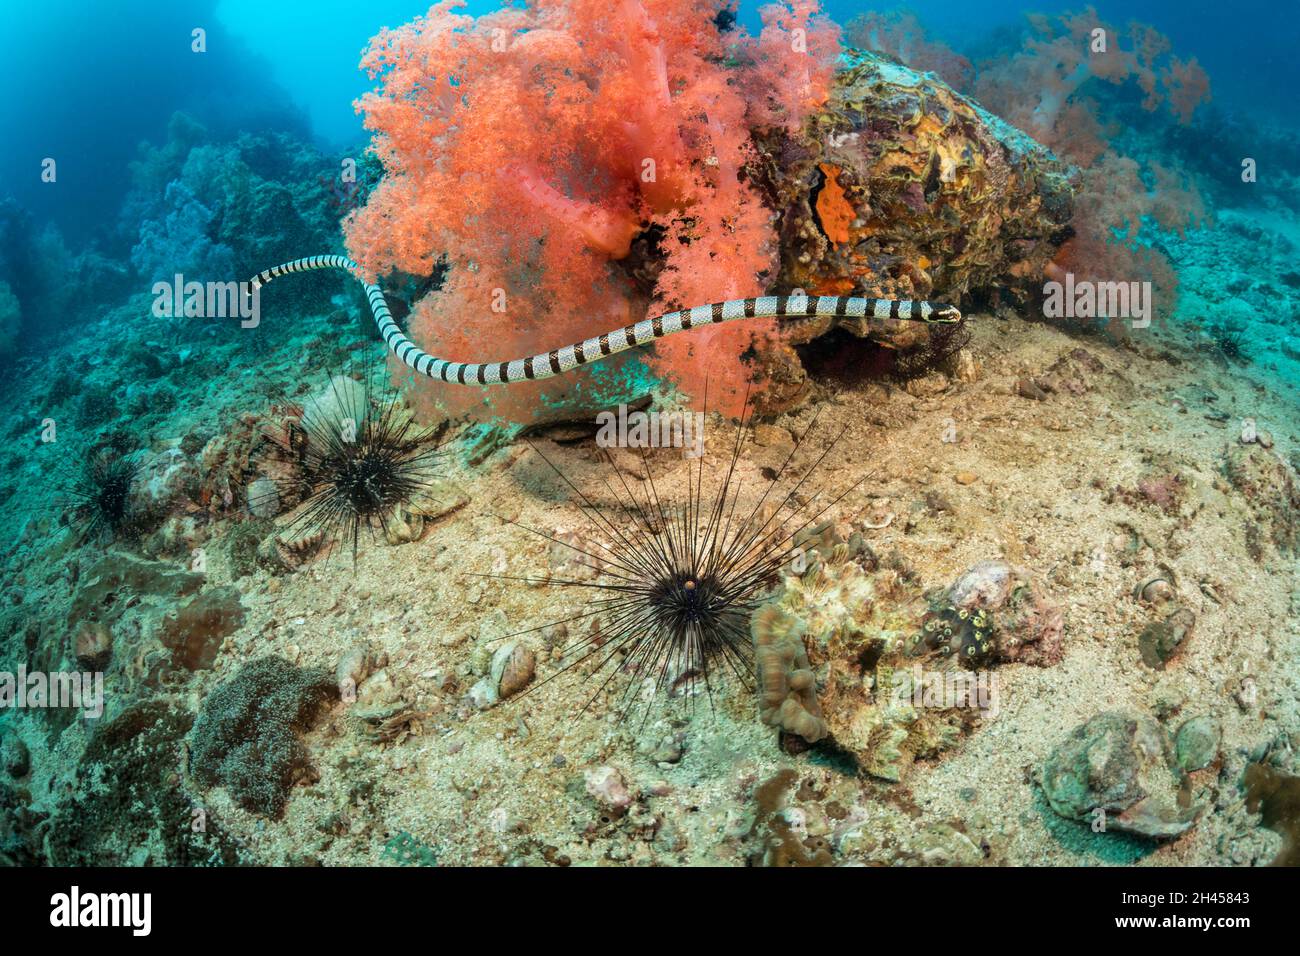 This venomous banded yellowlip sea snake, Laticauda colubrina, also known as a sea krait, is cruising over two black long-spine sea urchins, Diadema s Stock Photo